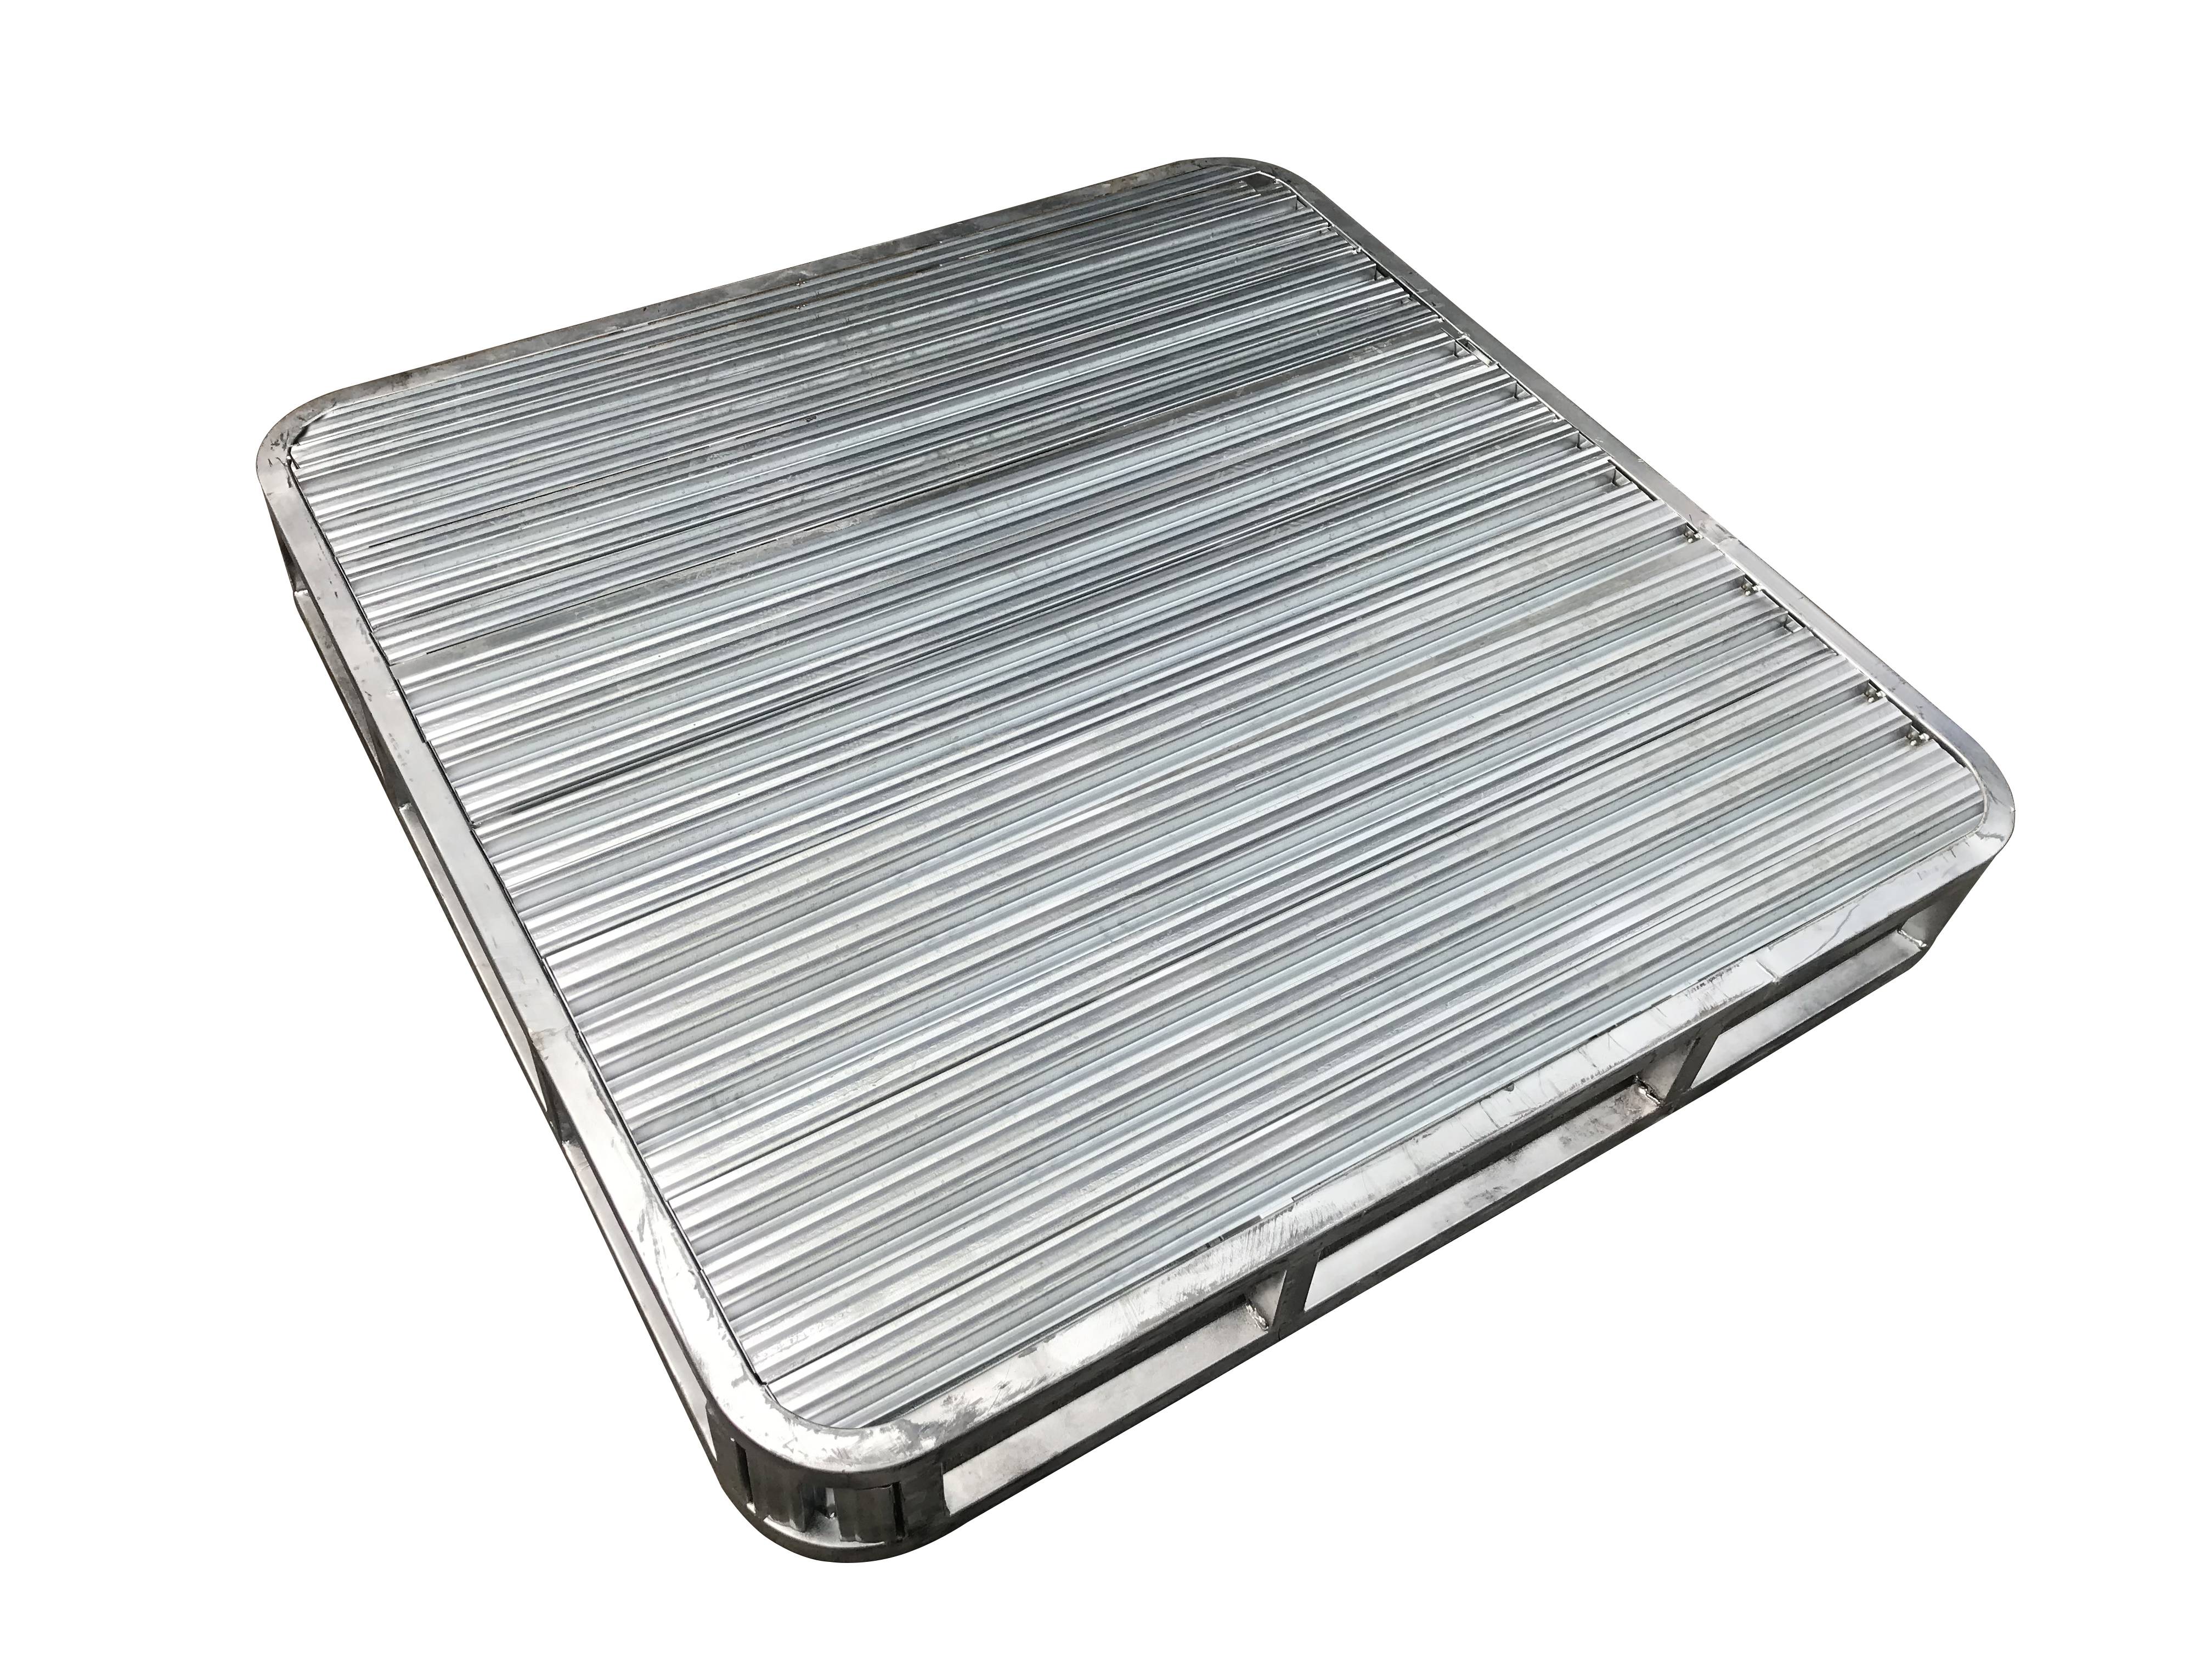 warehouse metal standard galvanized iron pallet Featured Image